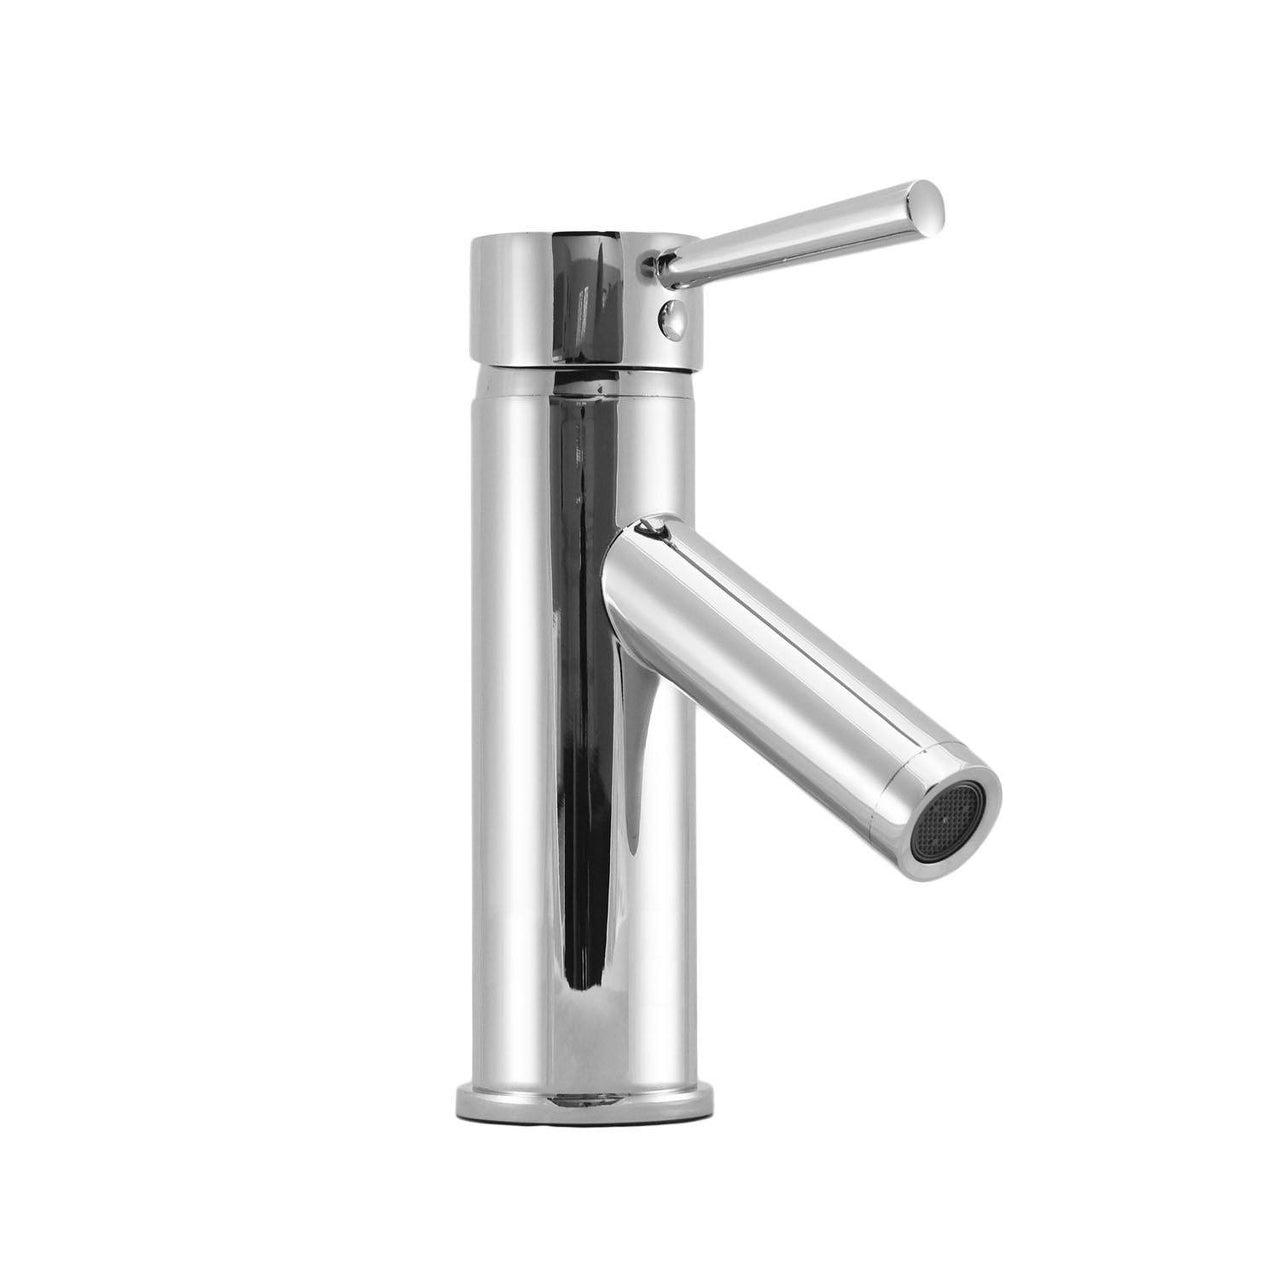 Virtu USA Zuri 39" Single Square Sink Grey Top Vanity in Grey with Polished Chrome Faucet and Mirror Vanity Virtu USA 